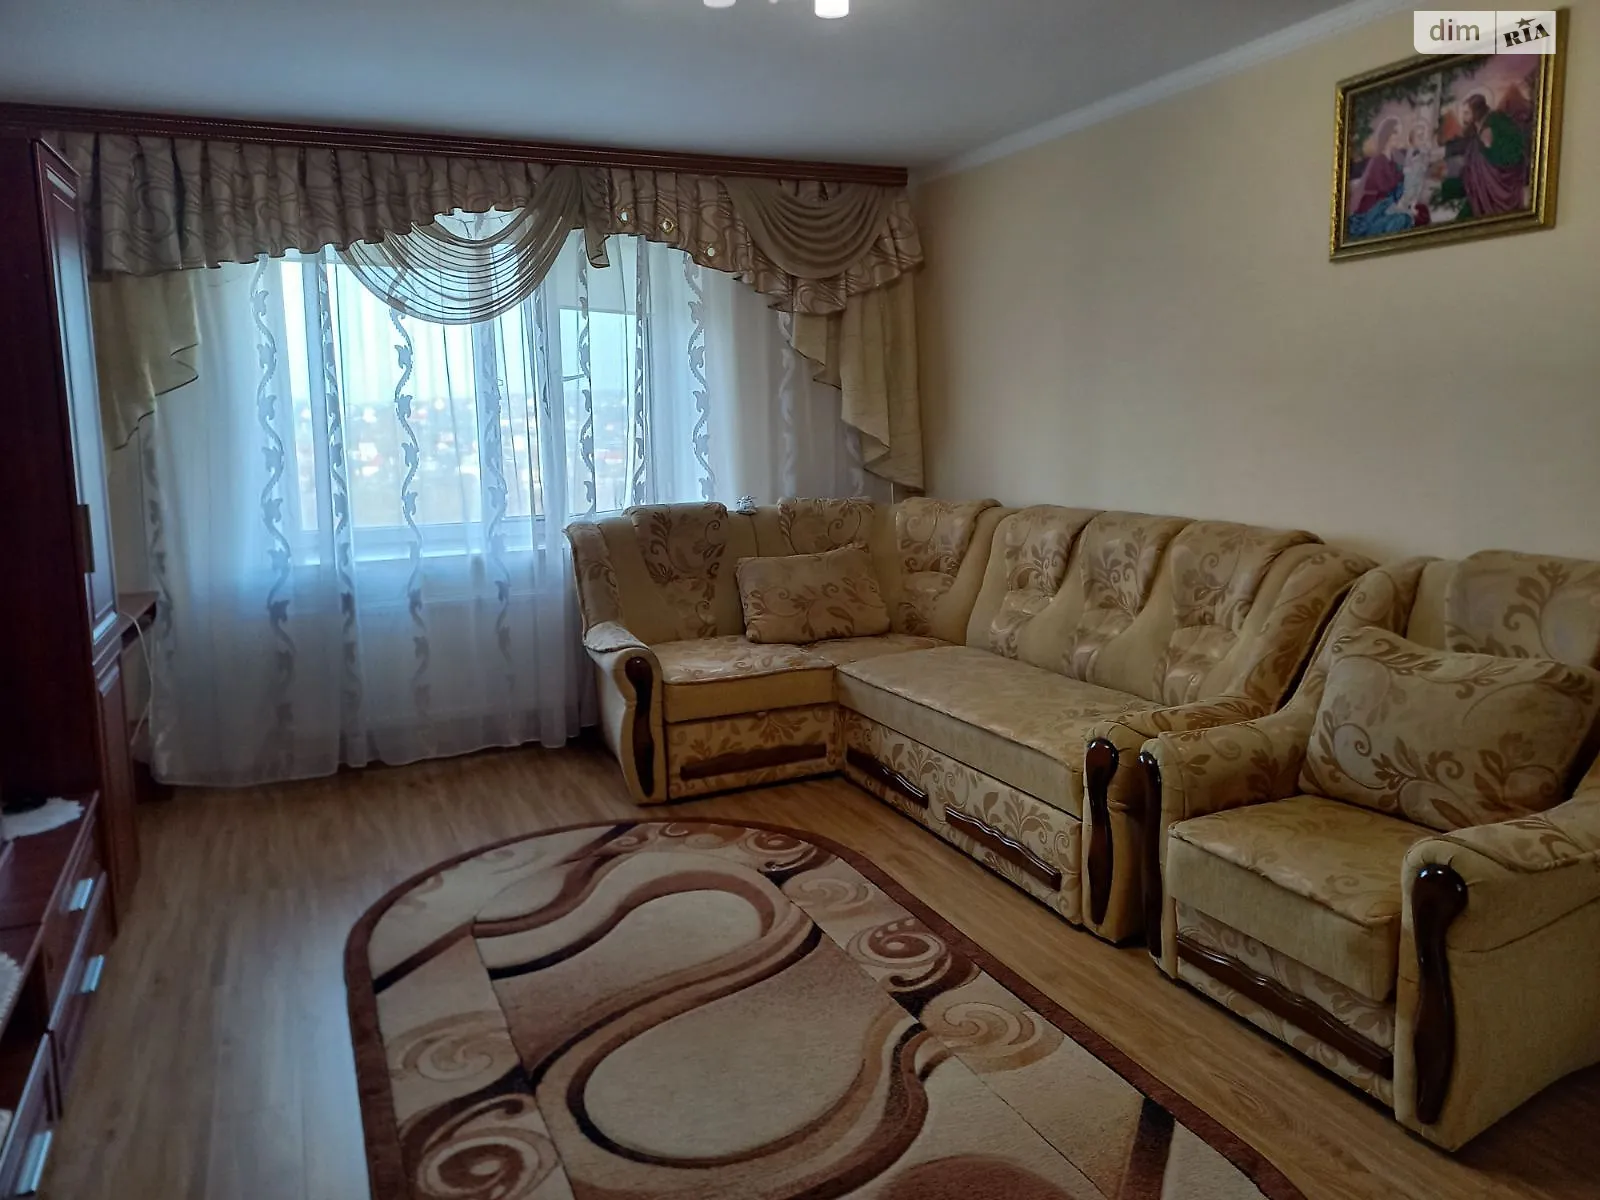 1-кімнатна квартира 50 кв. м у Тернополі, цена: 200 $ - фото 1